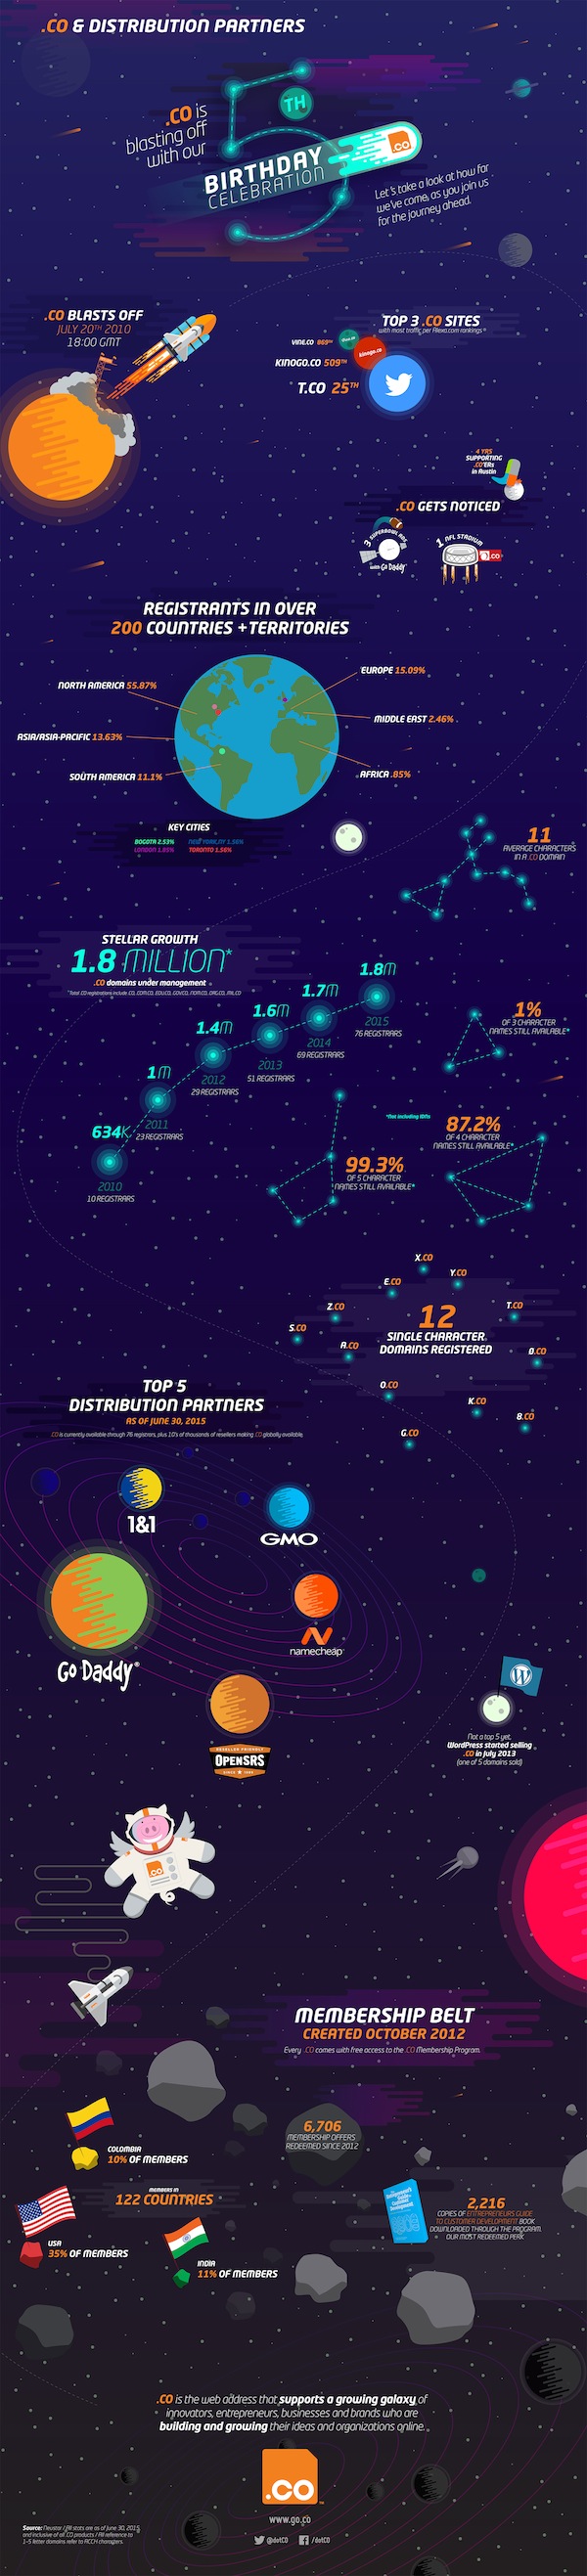 infographic_workingV6